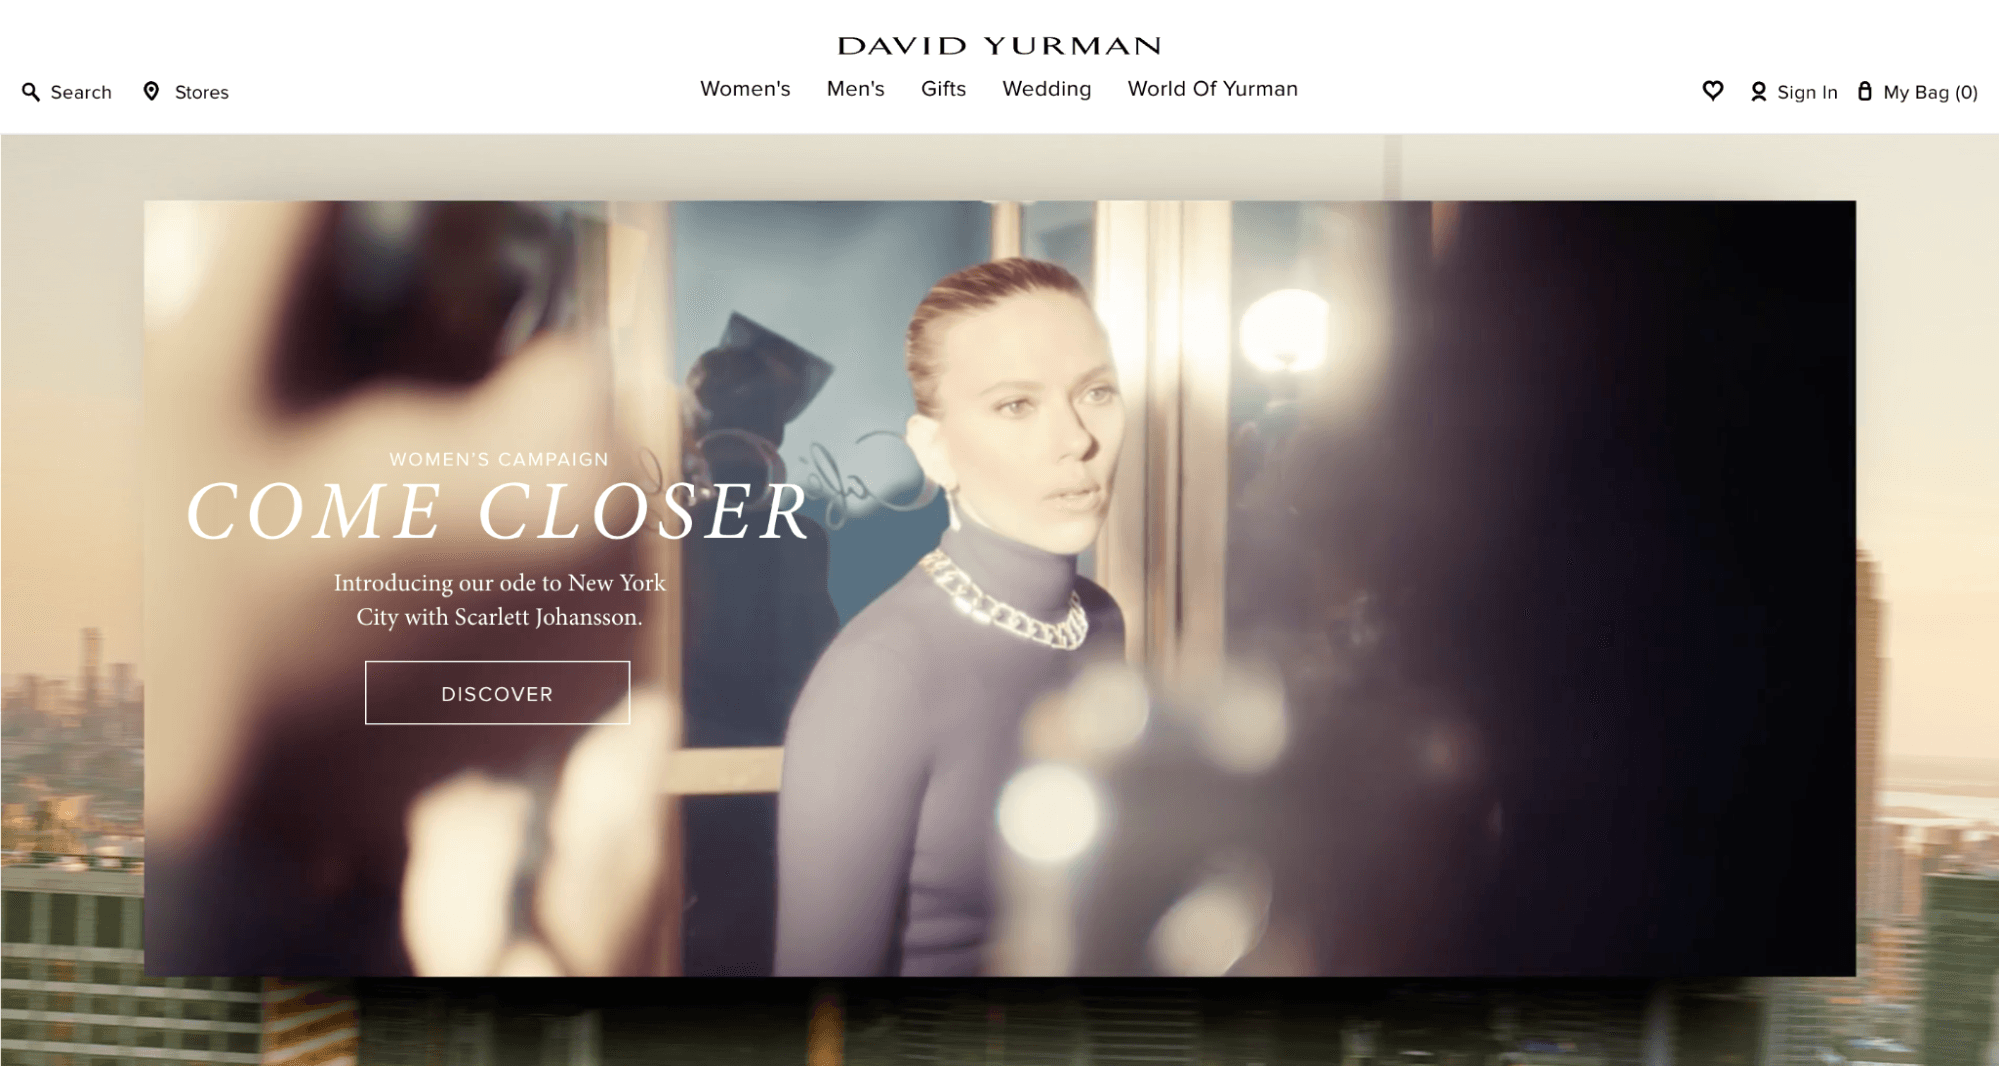 Luxury brand David Yurman's home page of their website